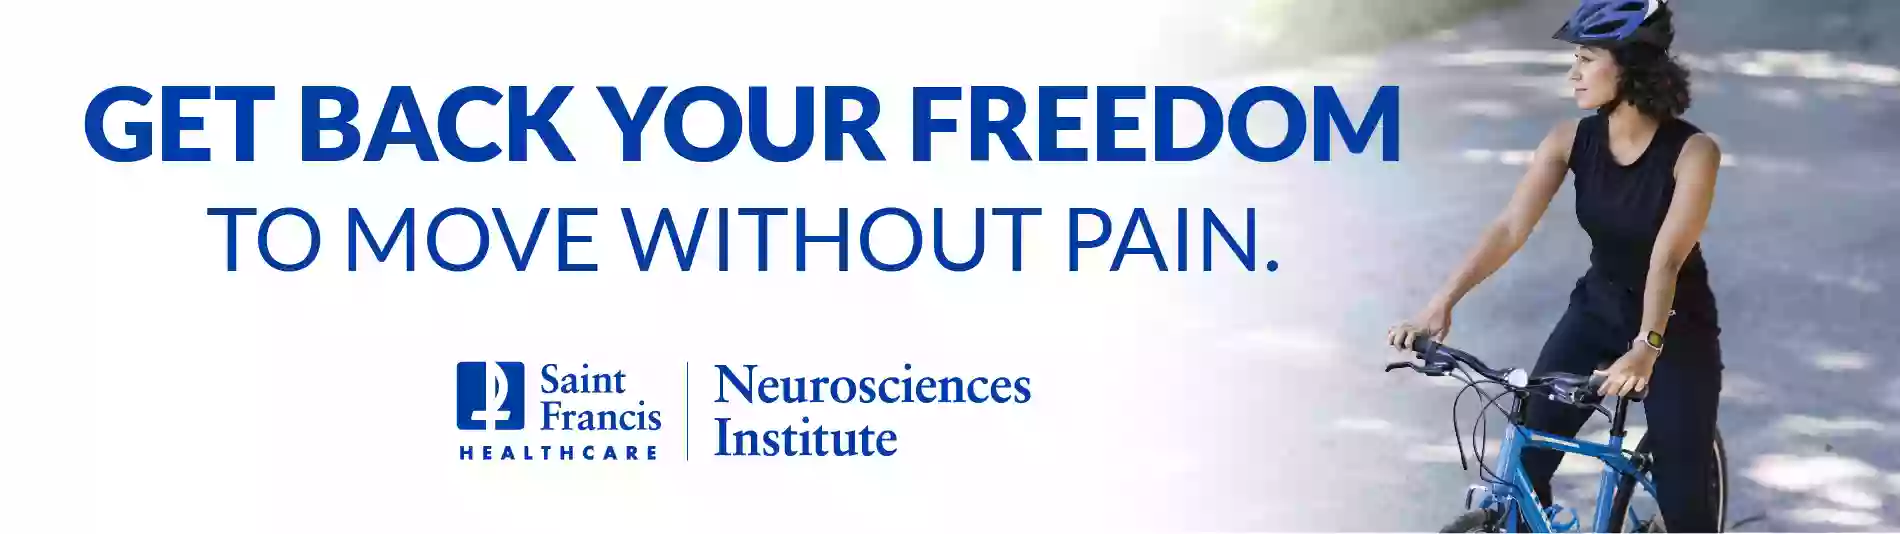 Saint Francis Neurosciences Institute